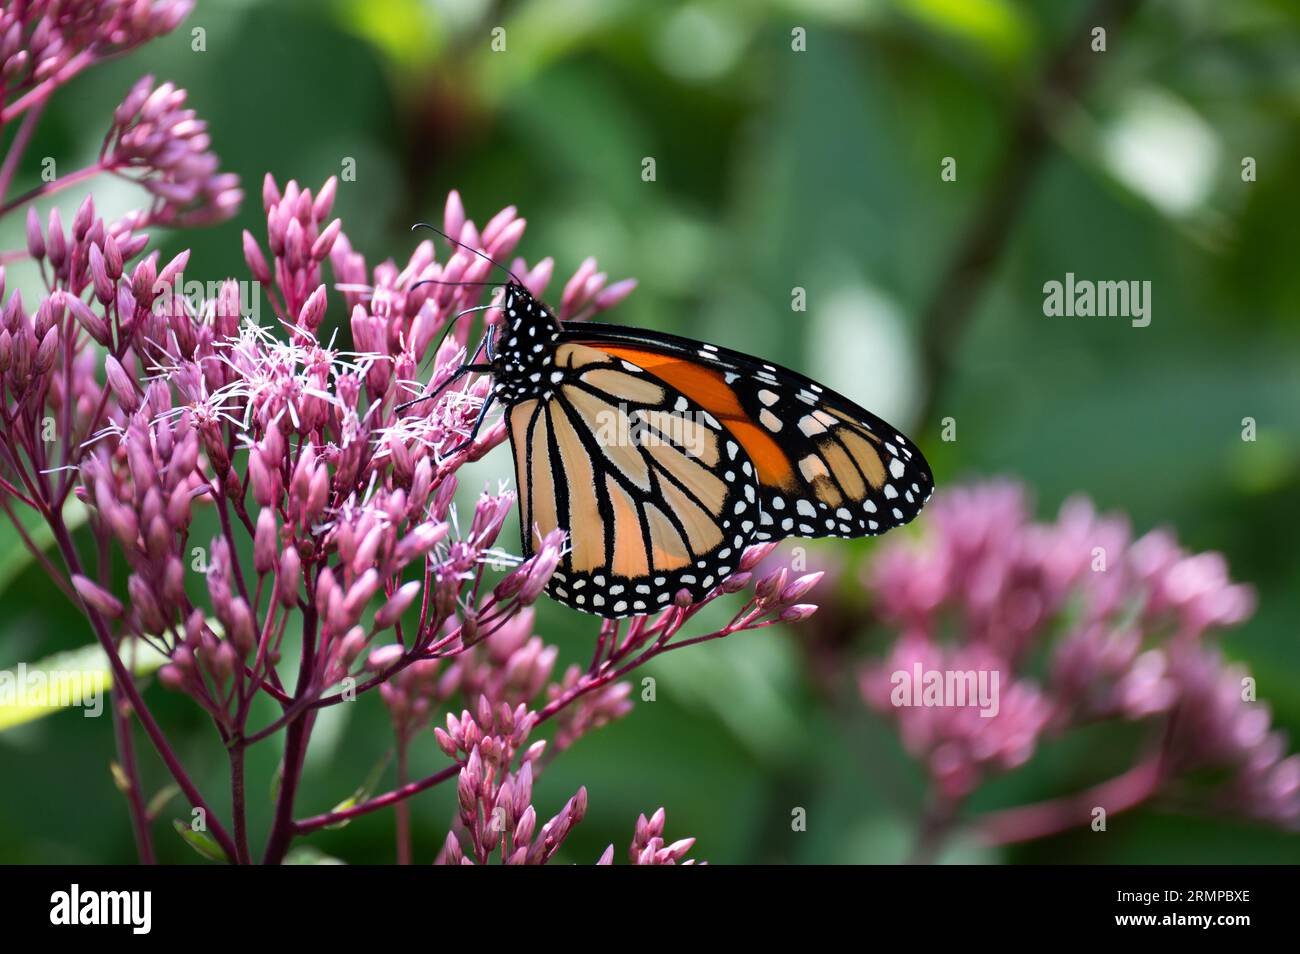 A Monarch Butterfly, Danaus plexippus, feeding on and pollinating Joe Pye weed flowers, Eutrochium purpureum, in a garden. Stock Photo